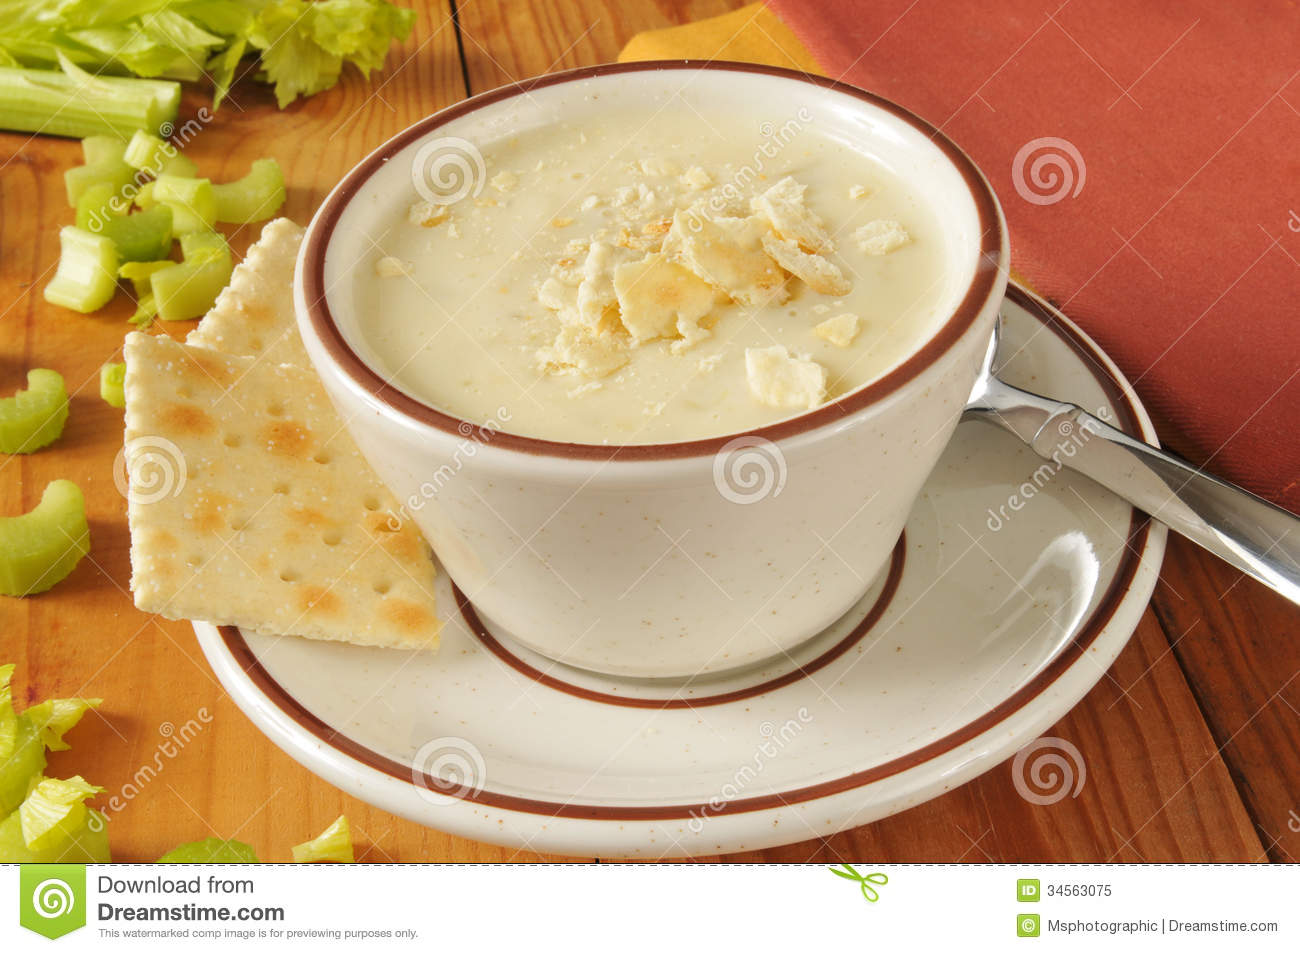 Cream Of Celery Soup Royalty Free Stock Photo   Image  34563075